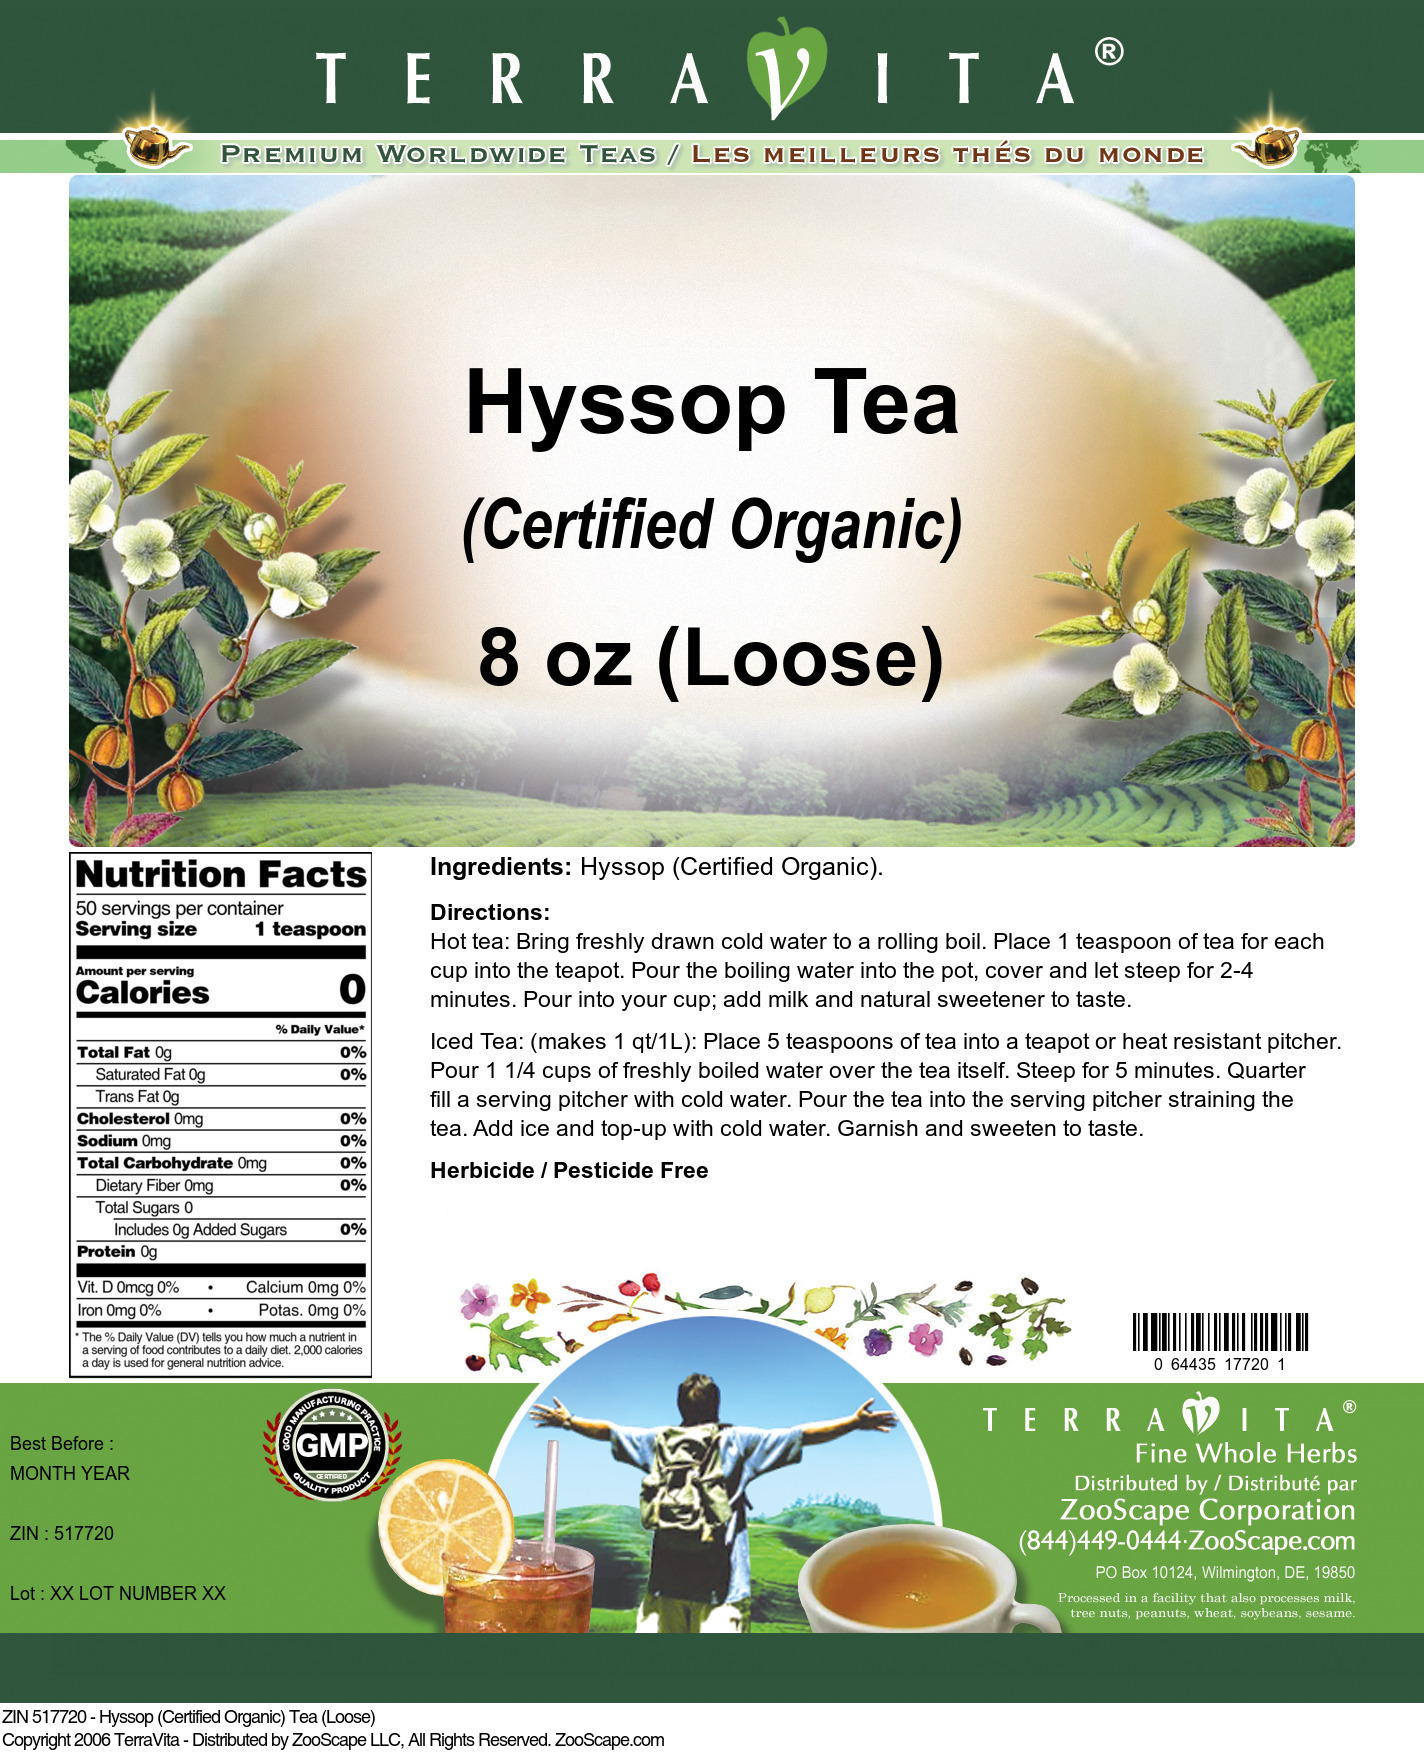 Hyssop (Certified Organic) Tea (Loose) - Label